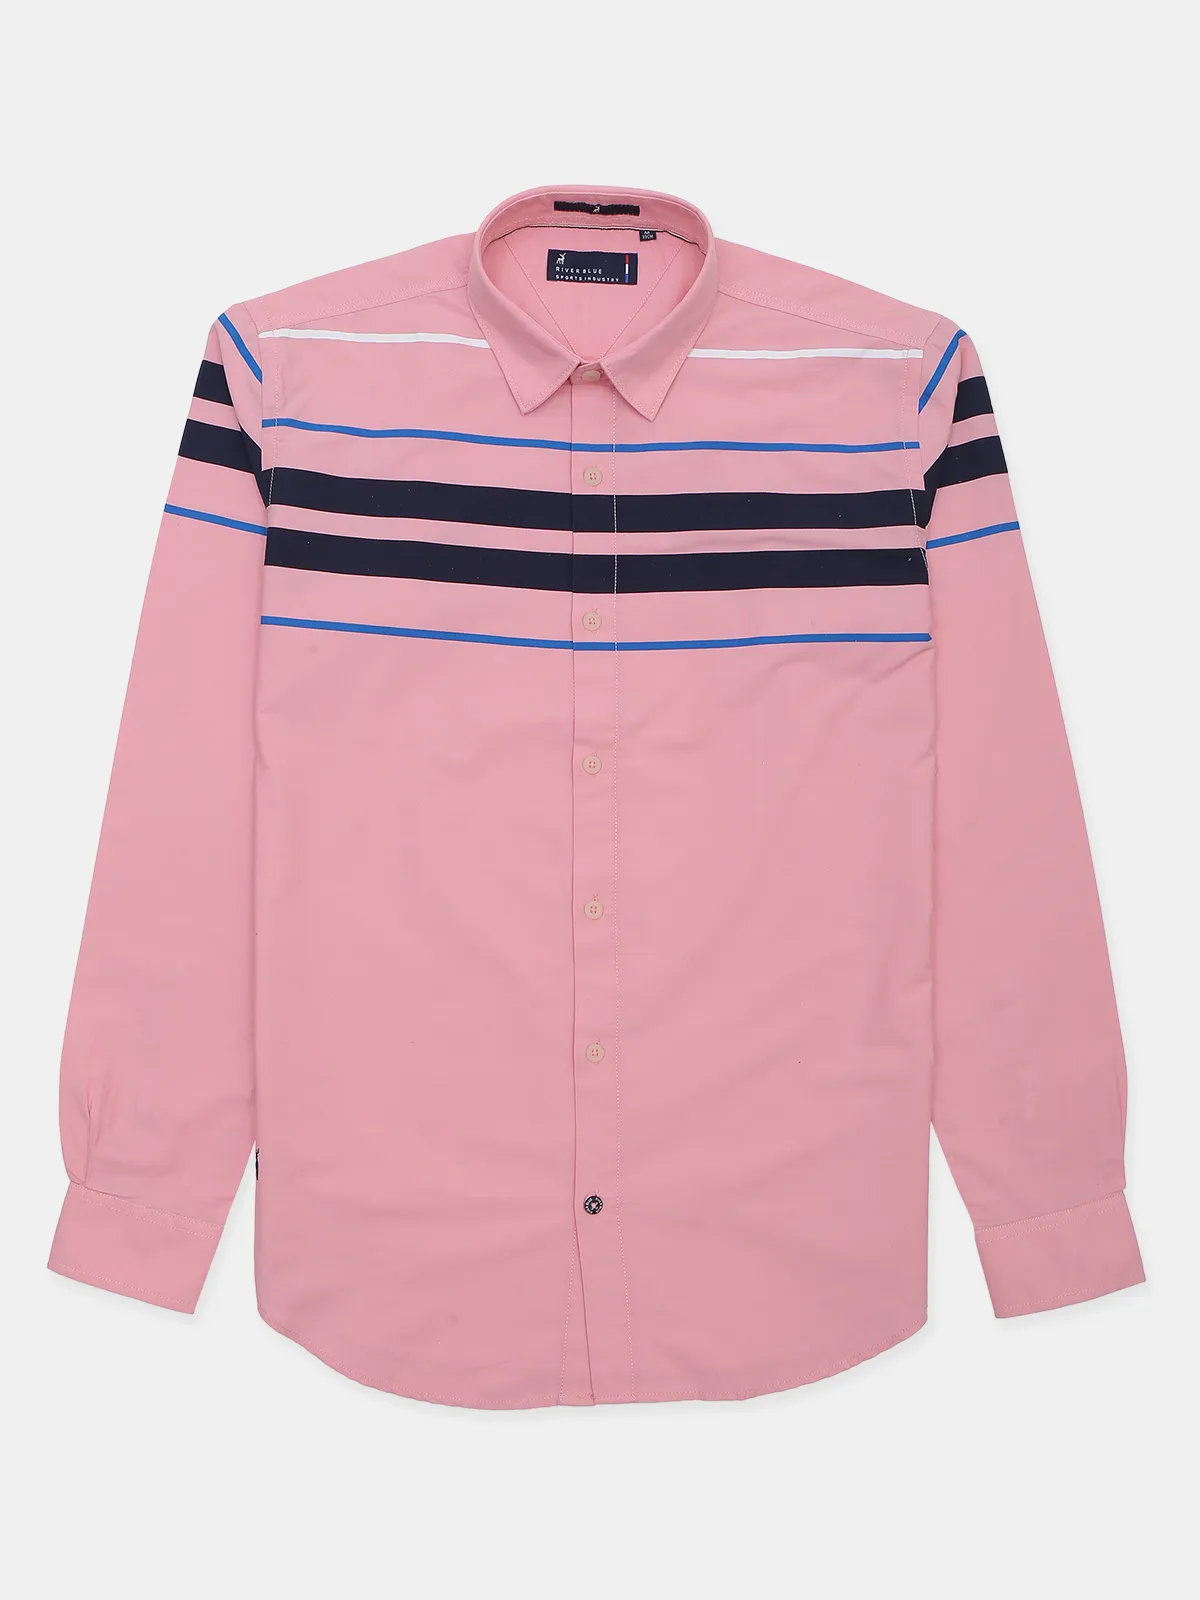 River Blue rose pink printed cotton hue shirt